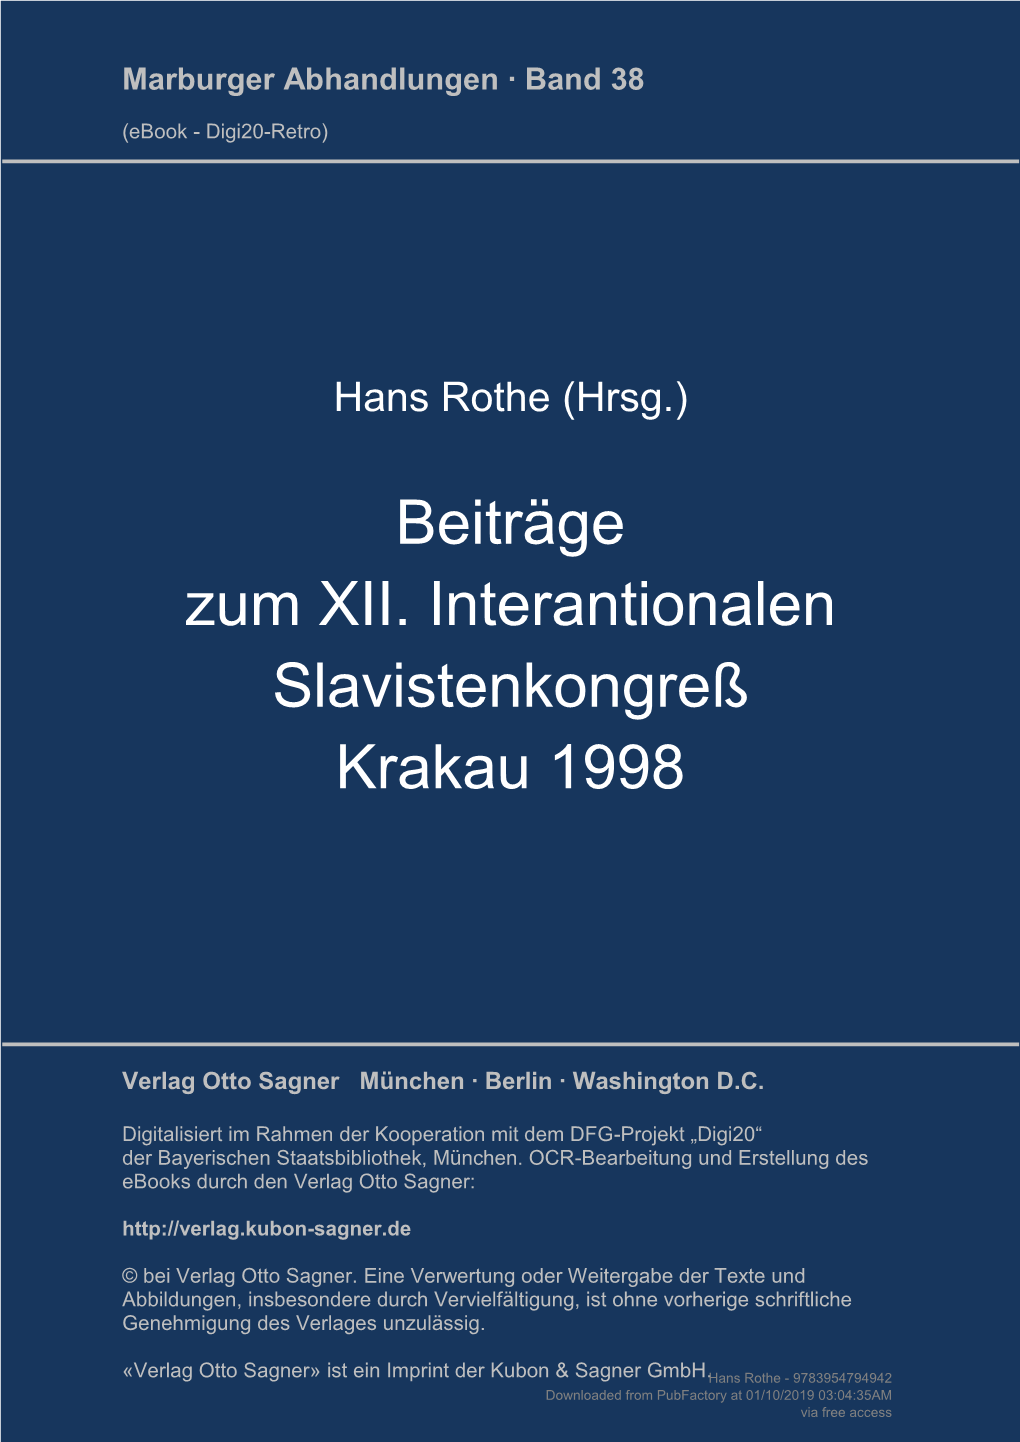 Beiträge Zum XII. Interantionalen Slavistenkongreß Krakau 1998